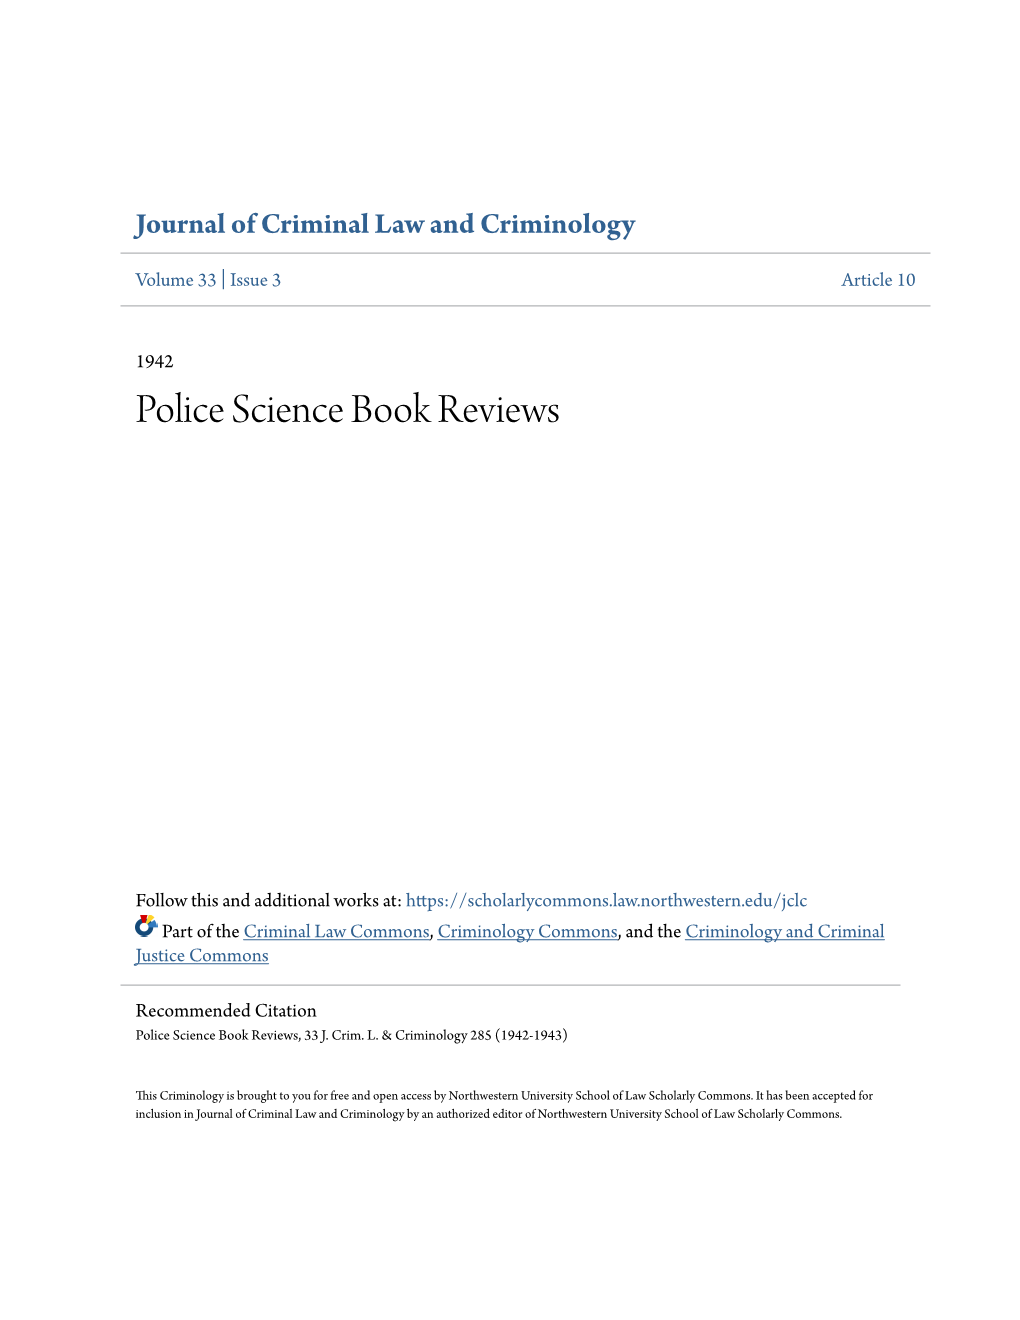 Police Science Book Reviews